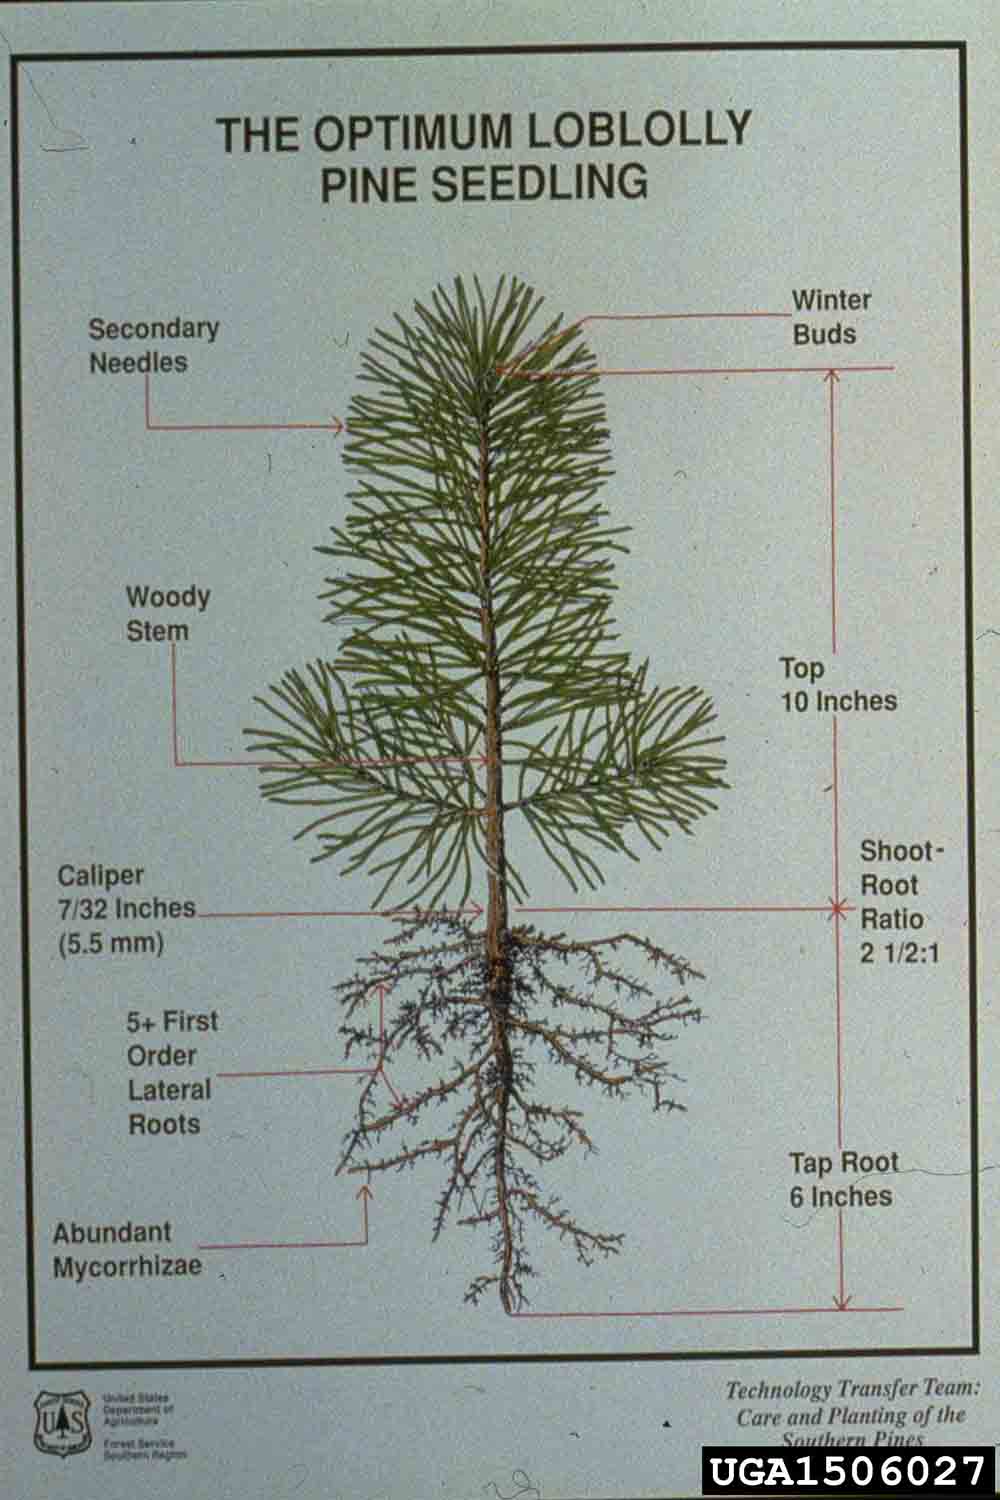 Diagram of optimum loblolly pine seedling